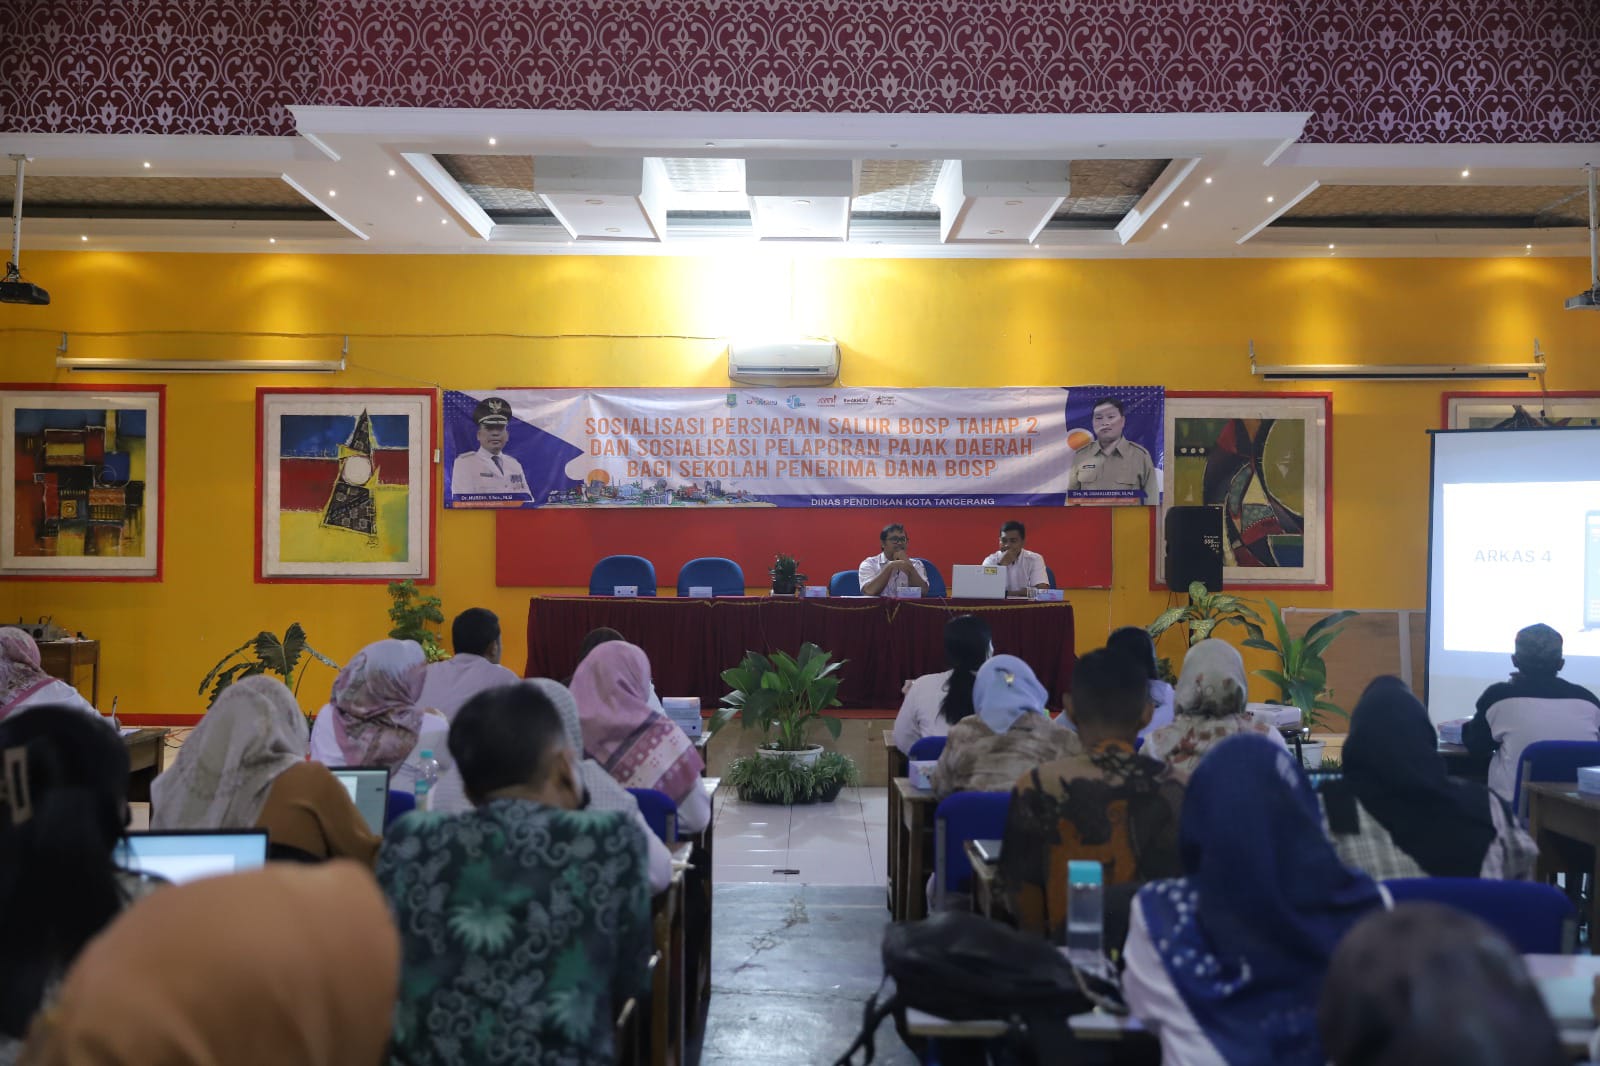 Dinas Pendidikan Kota Tangerang Gelar Sosialisasi Perpajakan Dana Bos